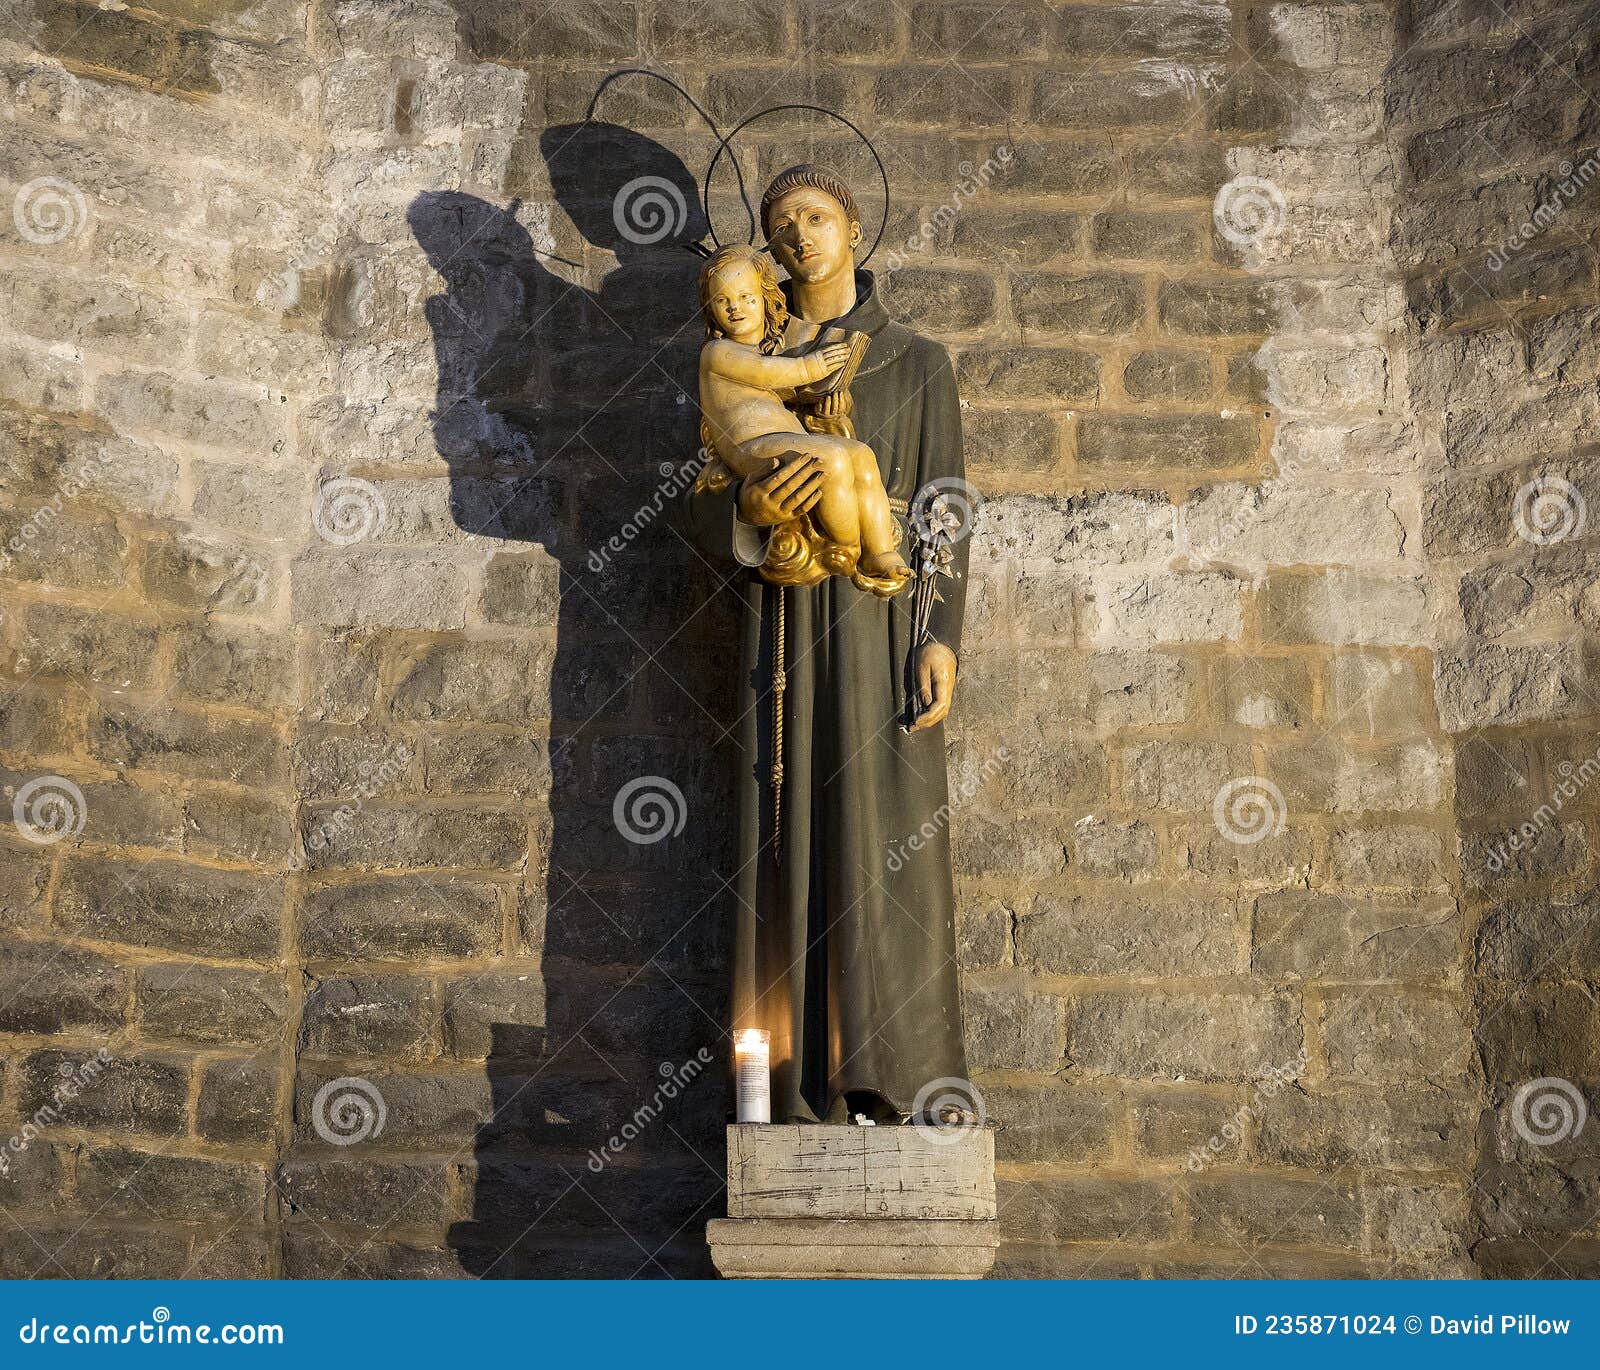 statue of saint anthony of padua inside the basilica de santa maria del mar in the ribera district of barcelona, spain.